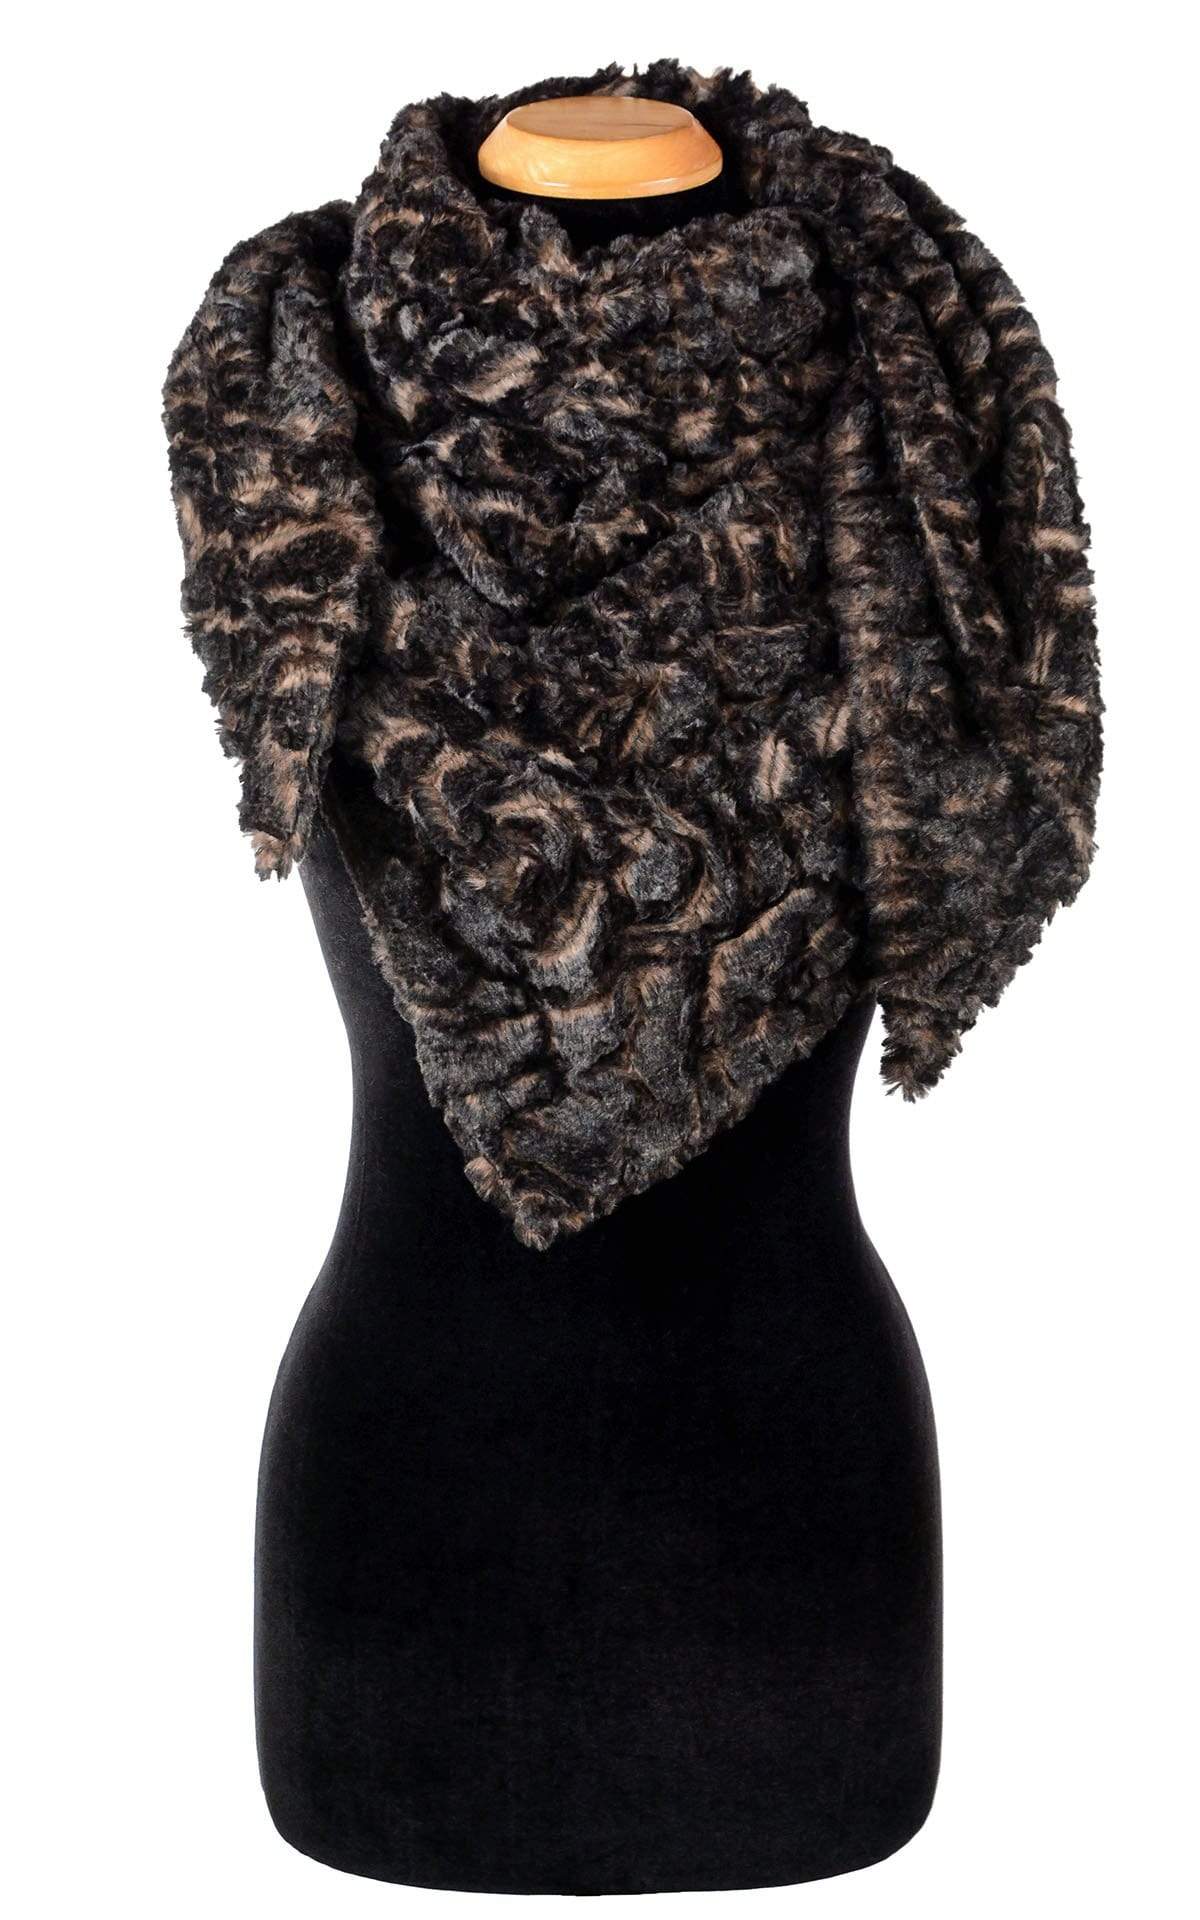 Bermuda Scarf - Luxury Faux Fur in Vintage Rose _ Sold Out!)